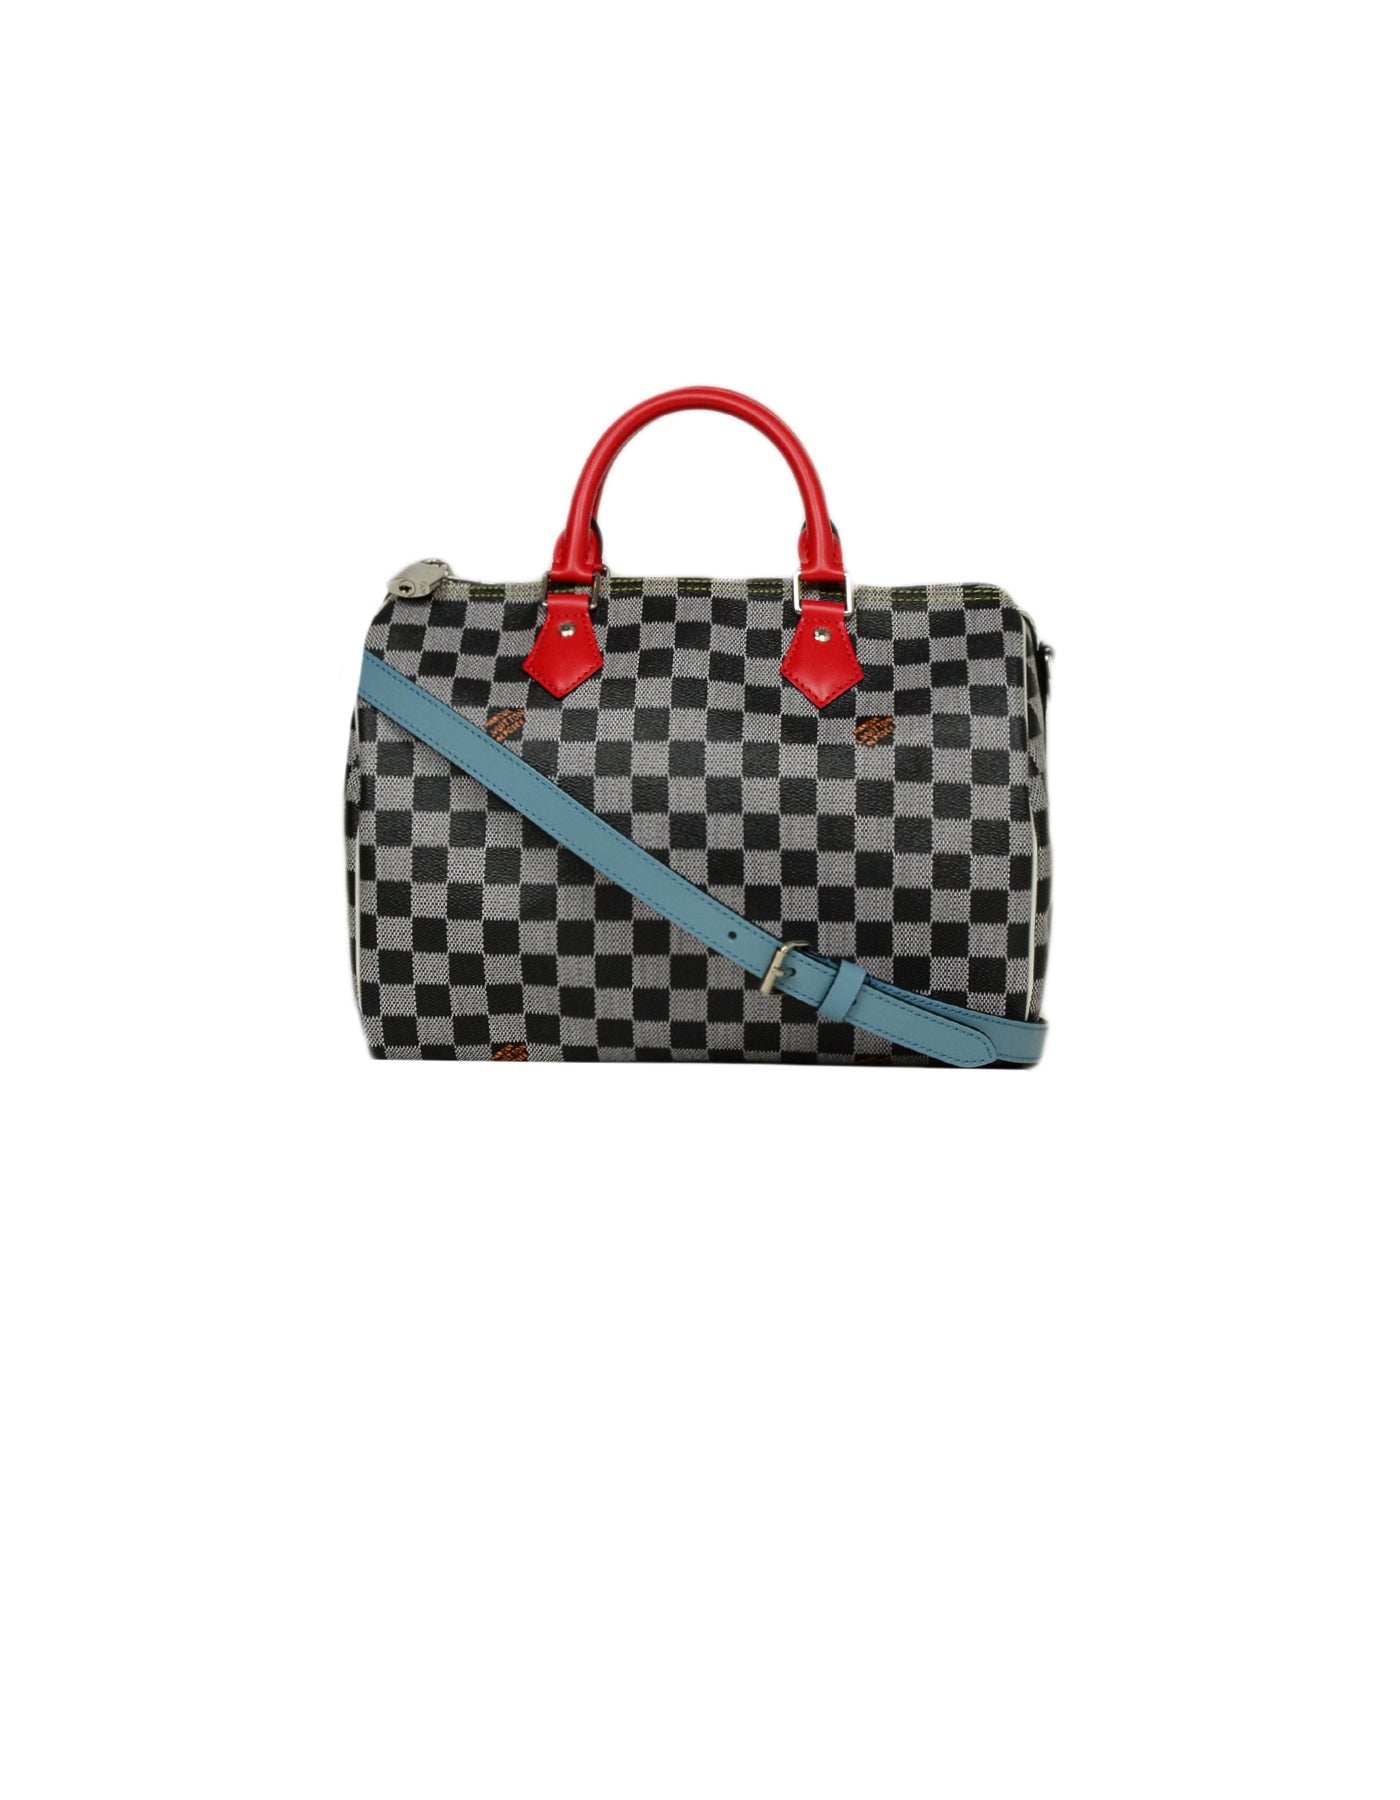 Louis Vuitton 2019 Limited Edition Black/White Damier Speedy Bandouliere 30  Bag